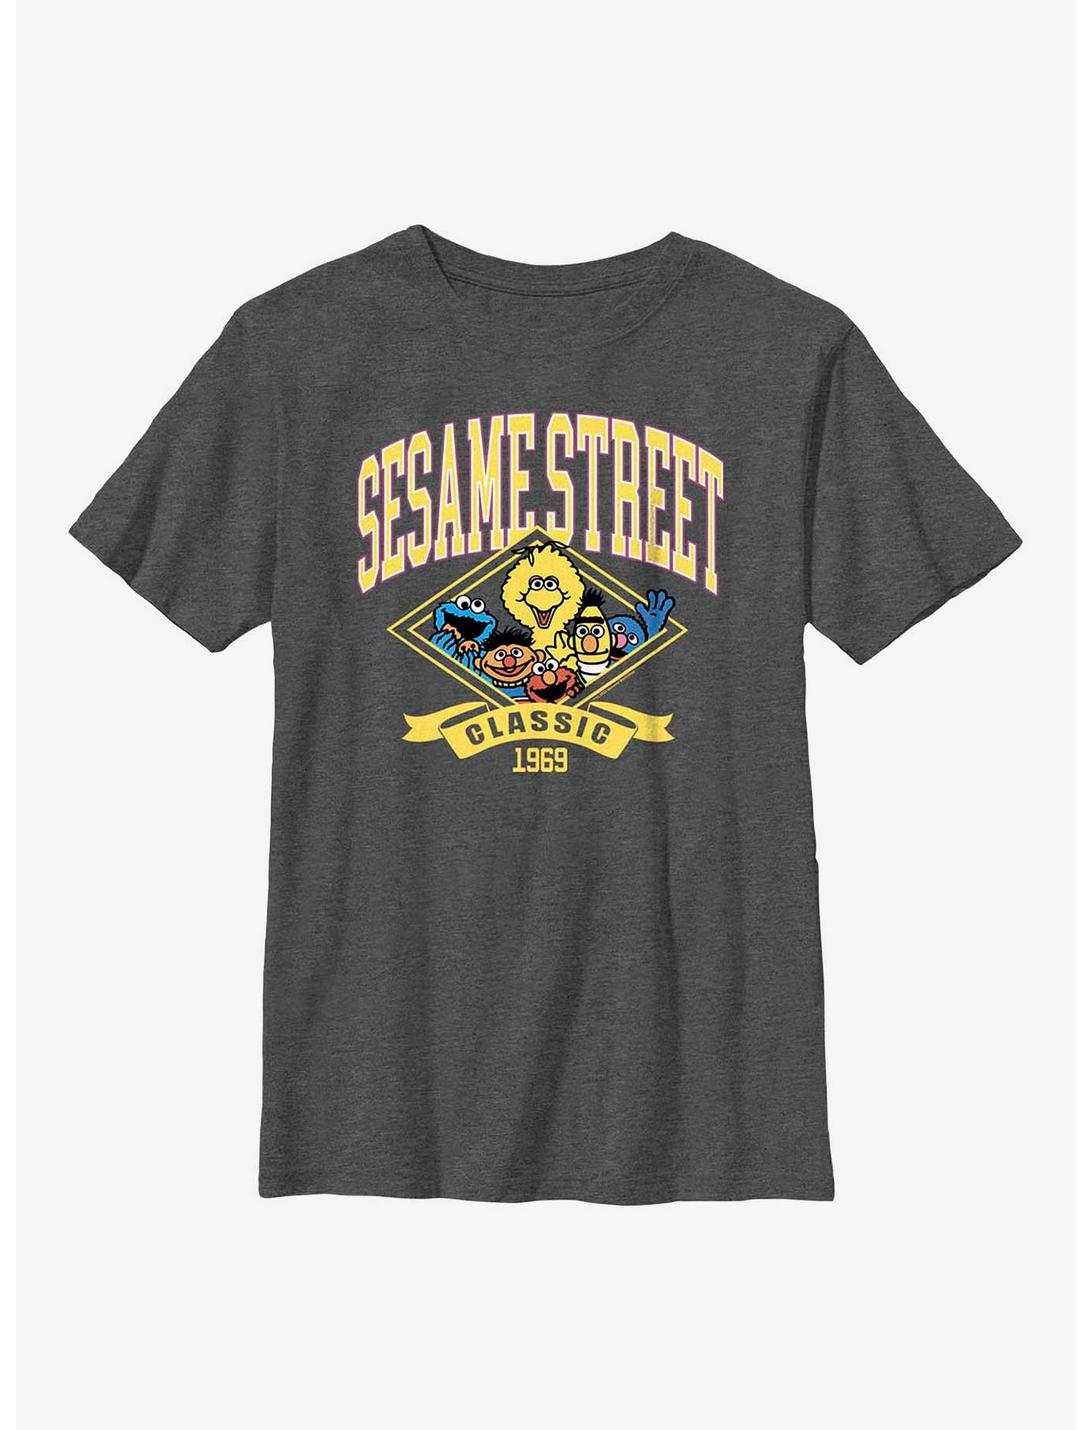 Sesame Street Classic 1969 Youth T-Shirt, CHAR HTR, hi-res